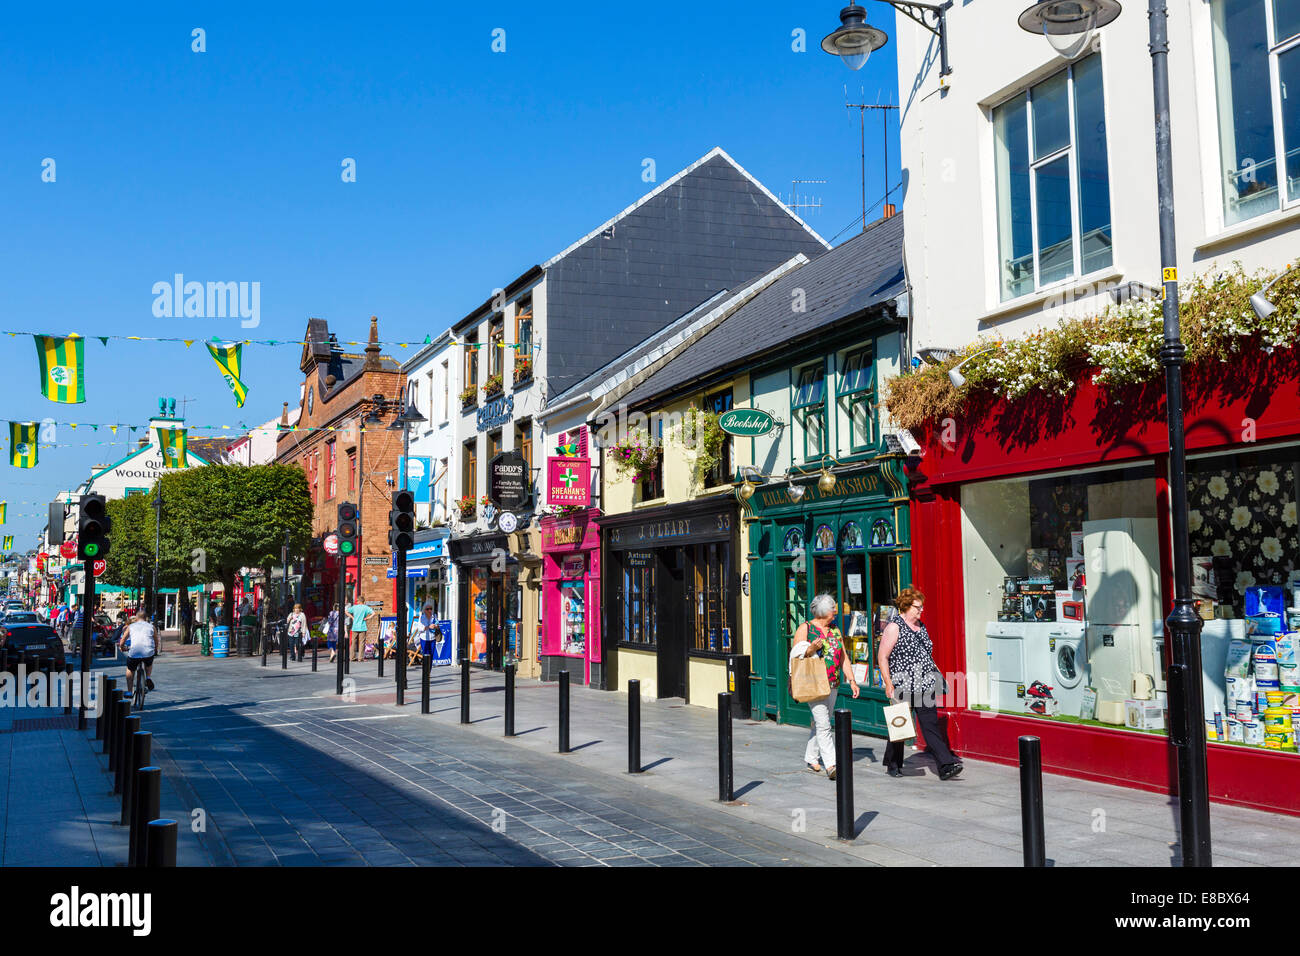 Pubs, shops and restaurants on Main Street, Killarney, County Kerry, Republic of Ireland Stock Photo